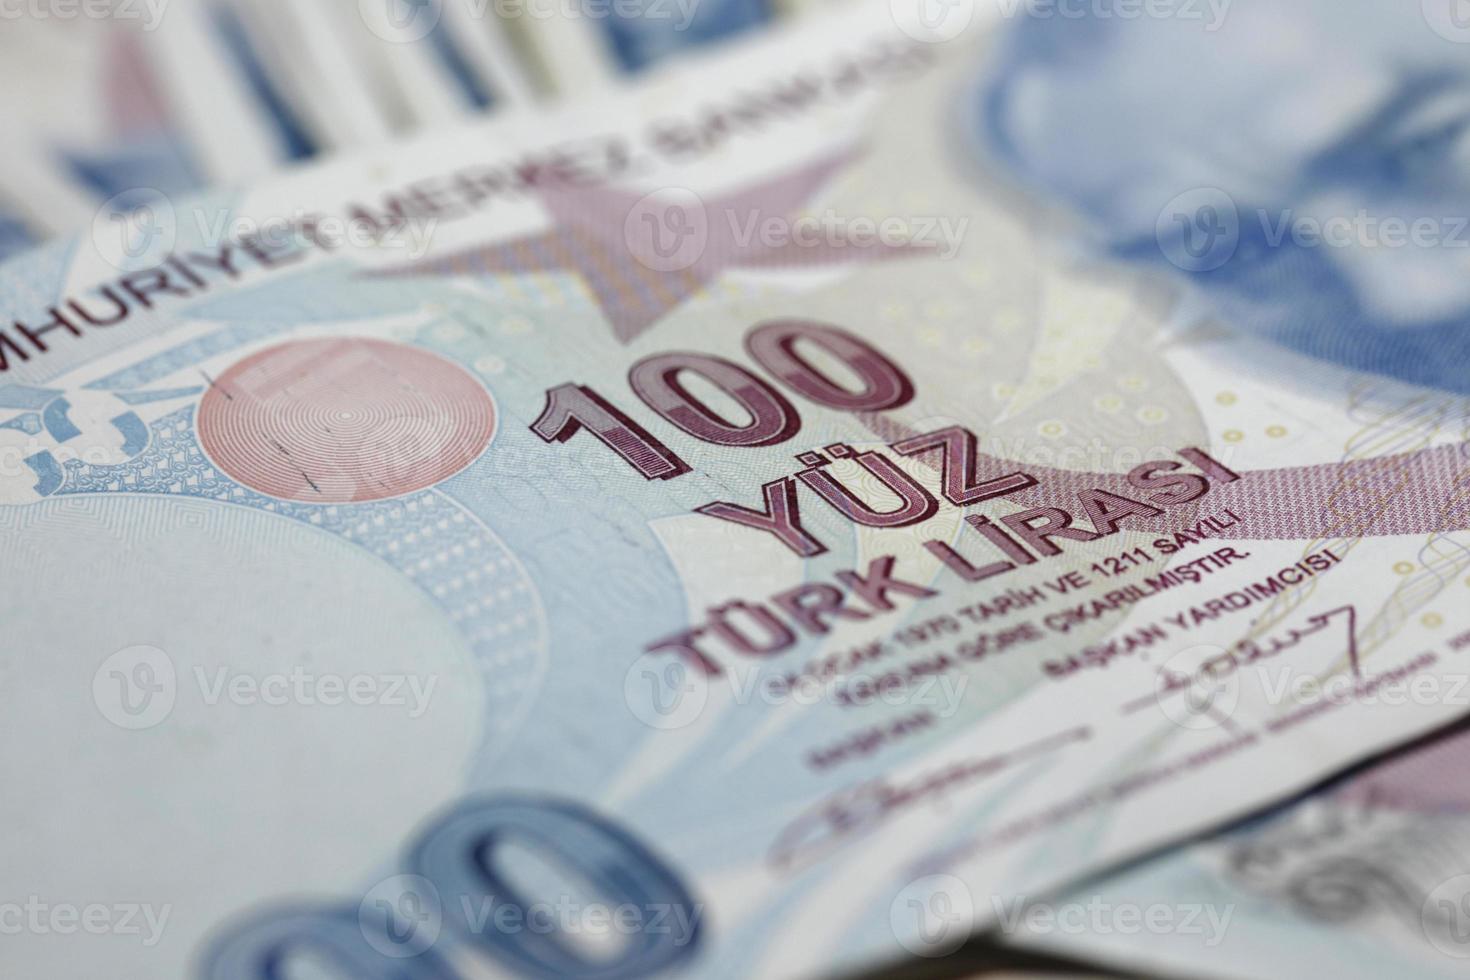 lire turque, billet de banque en lire turque photo